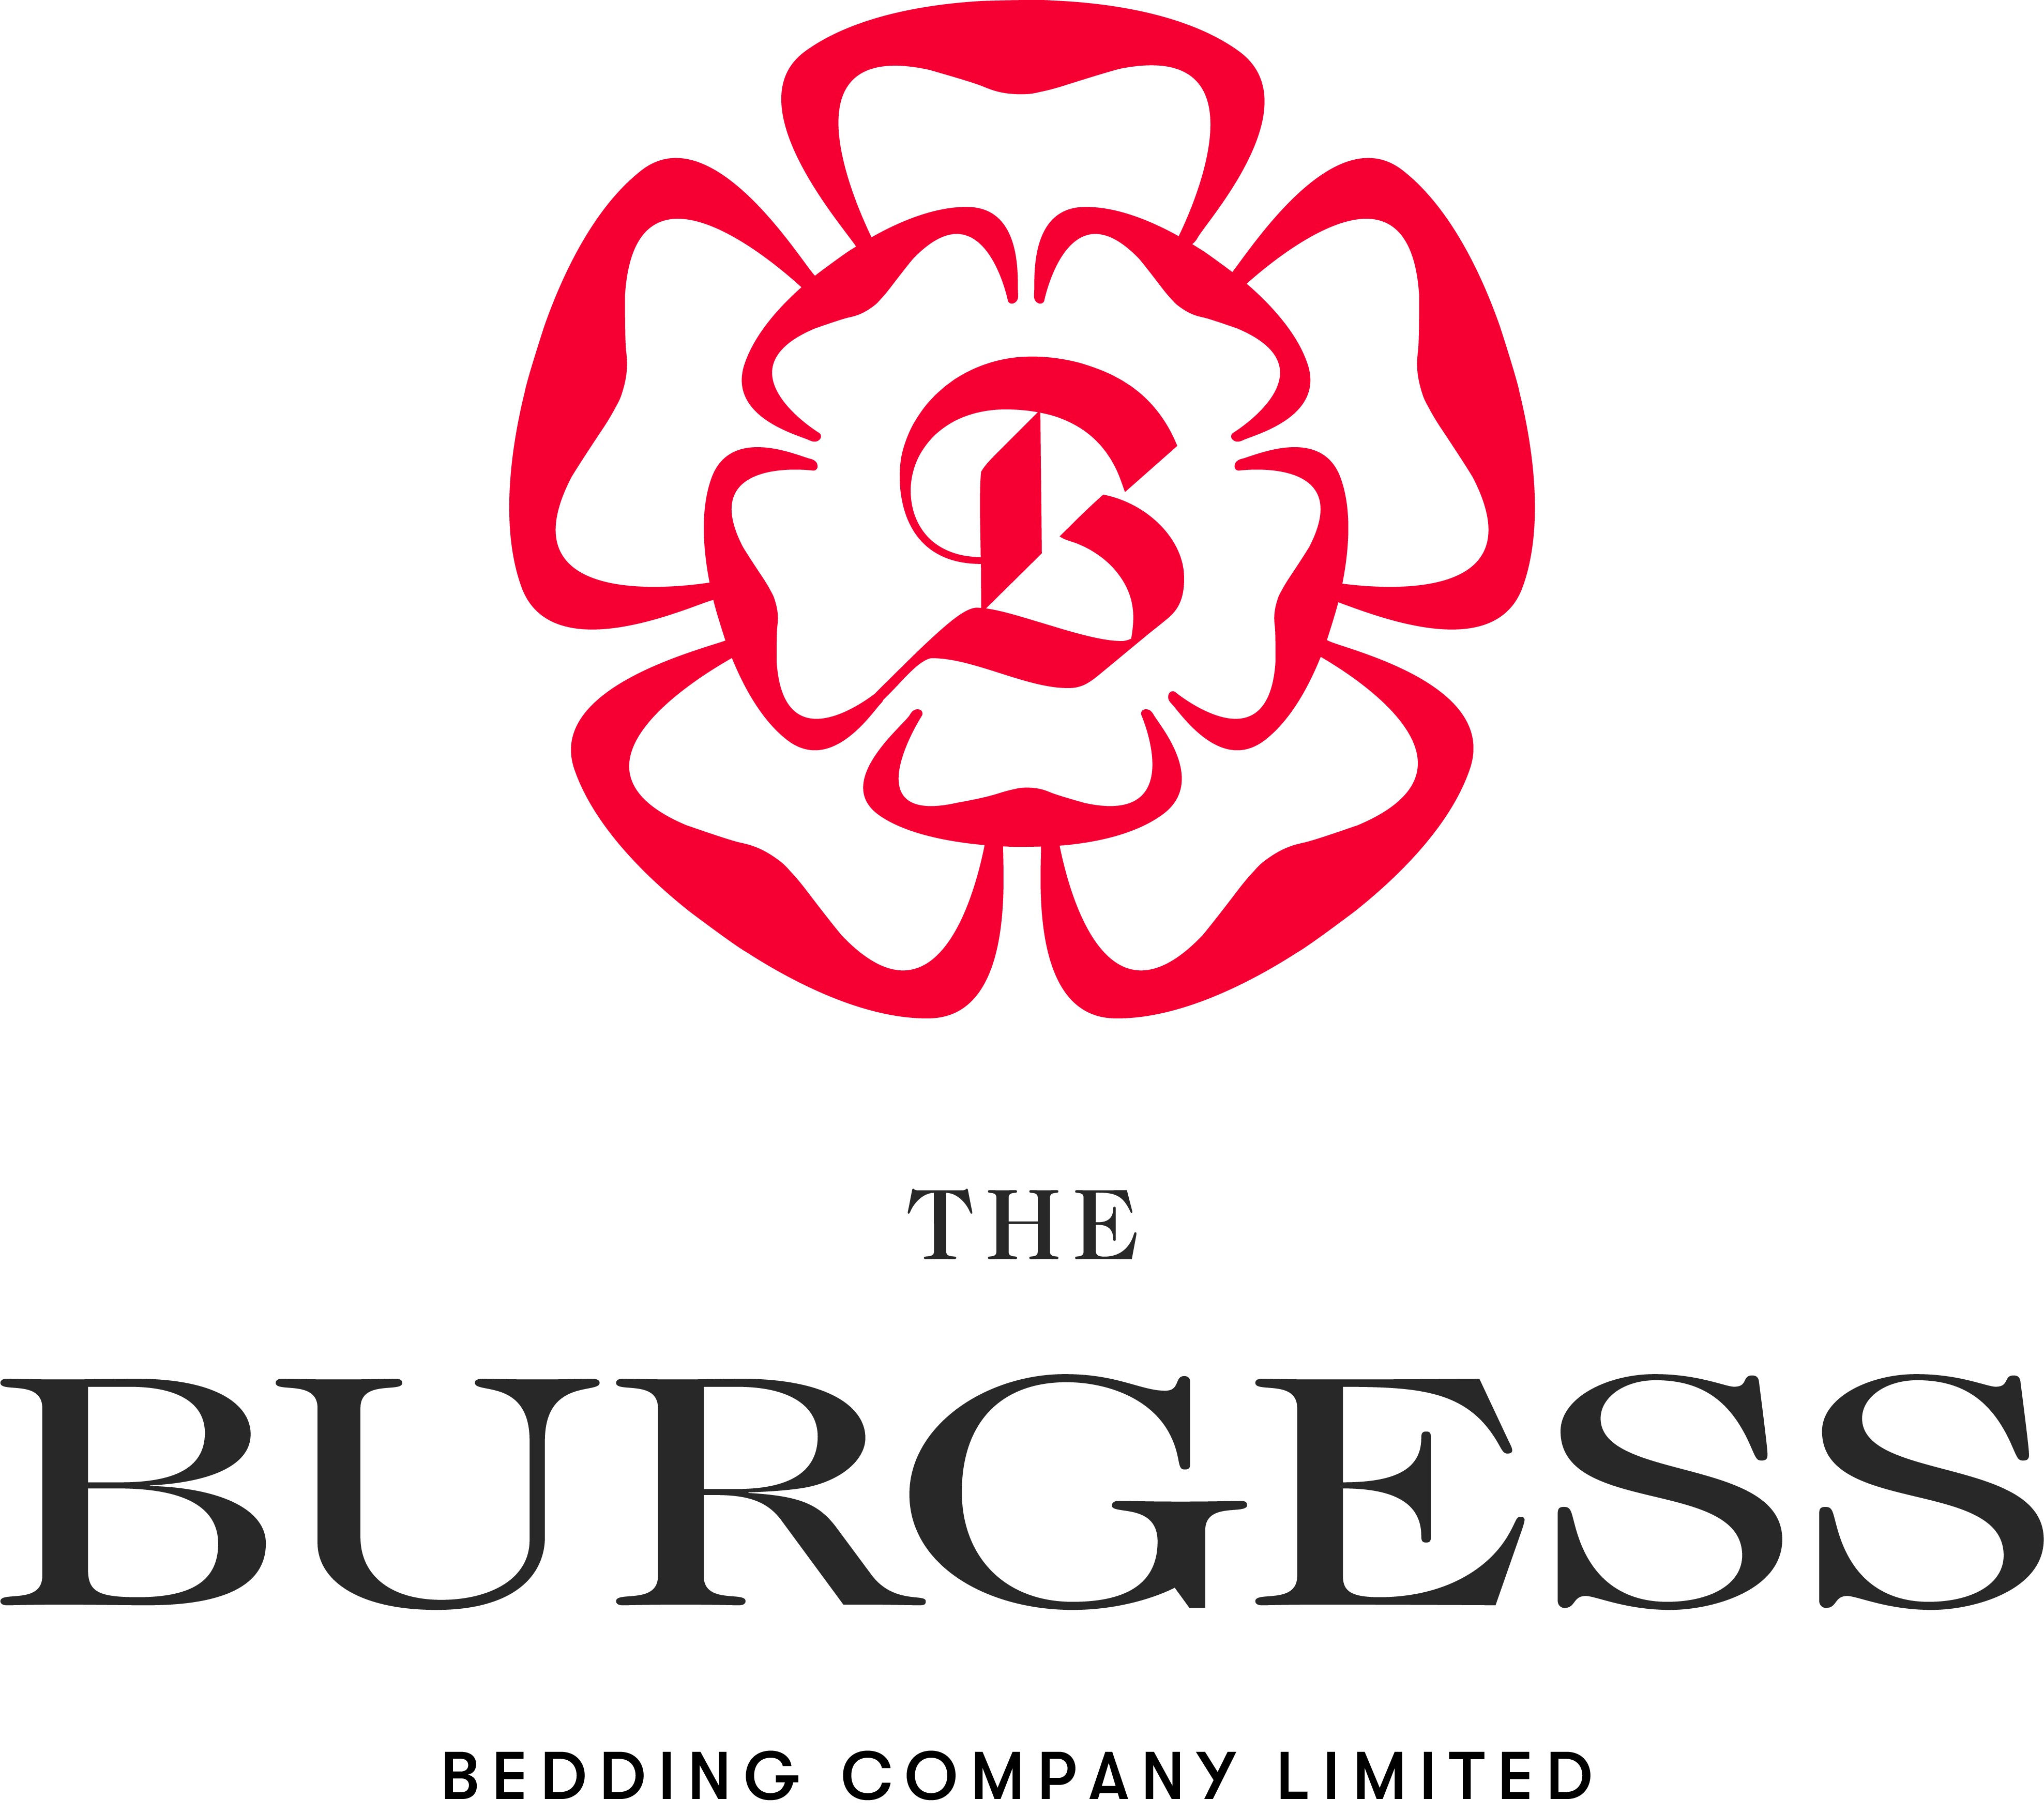 The Burgess Bedding Company